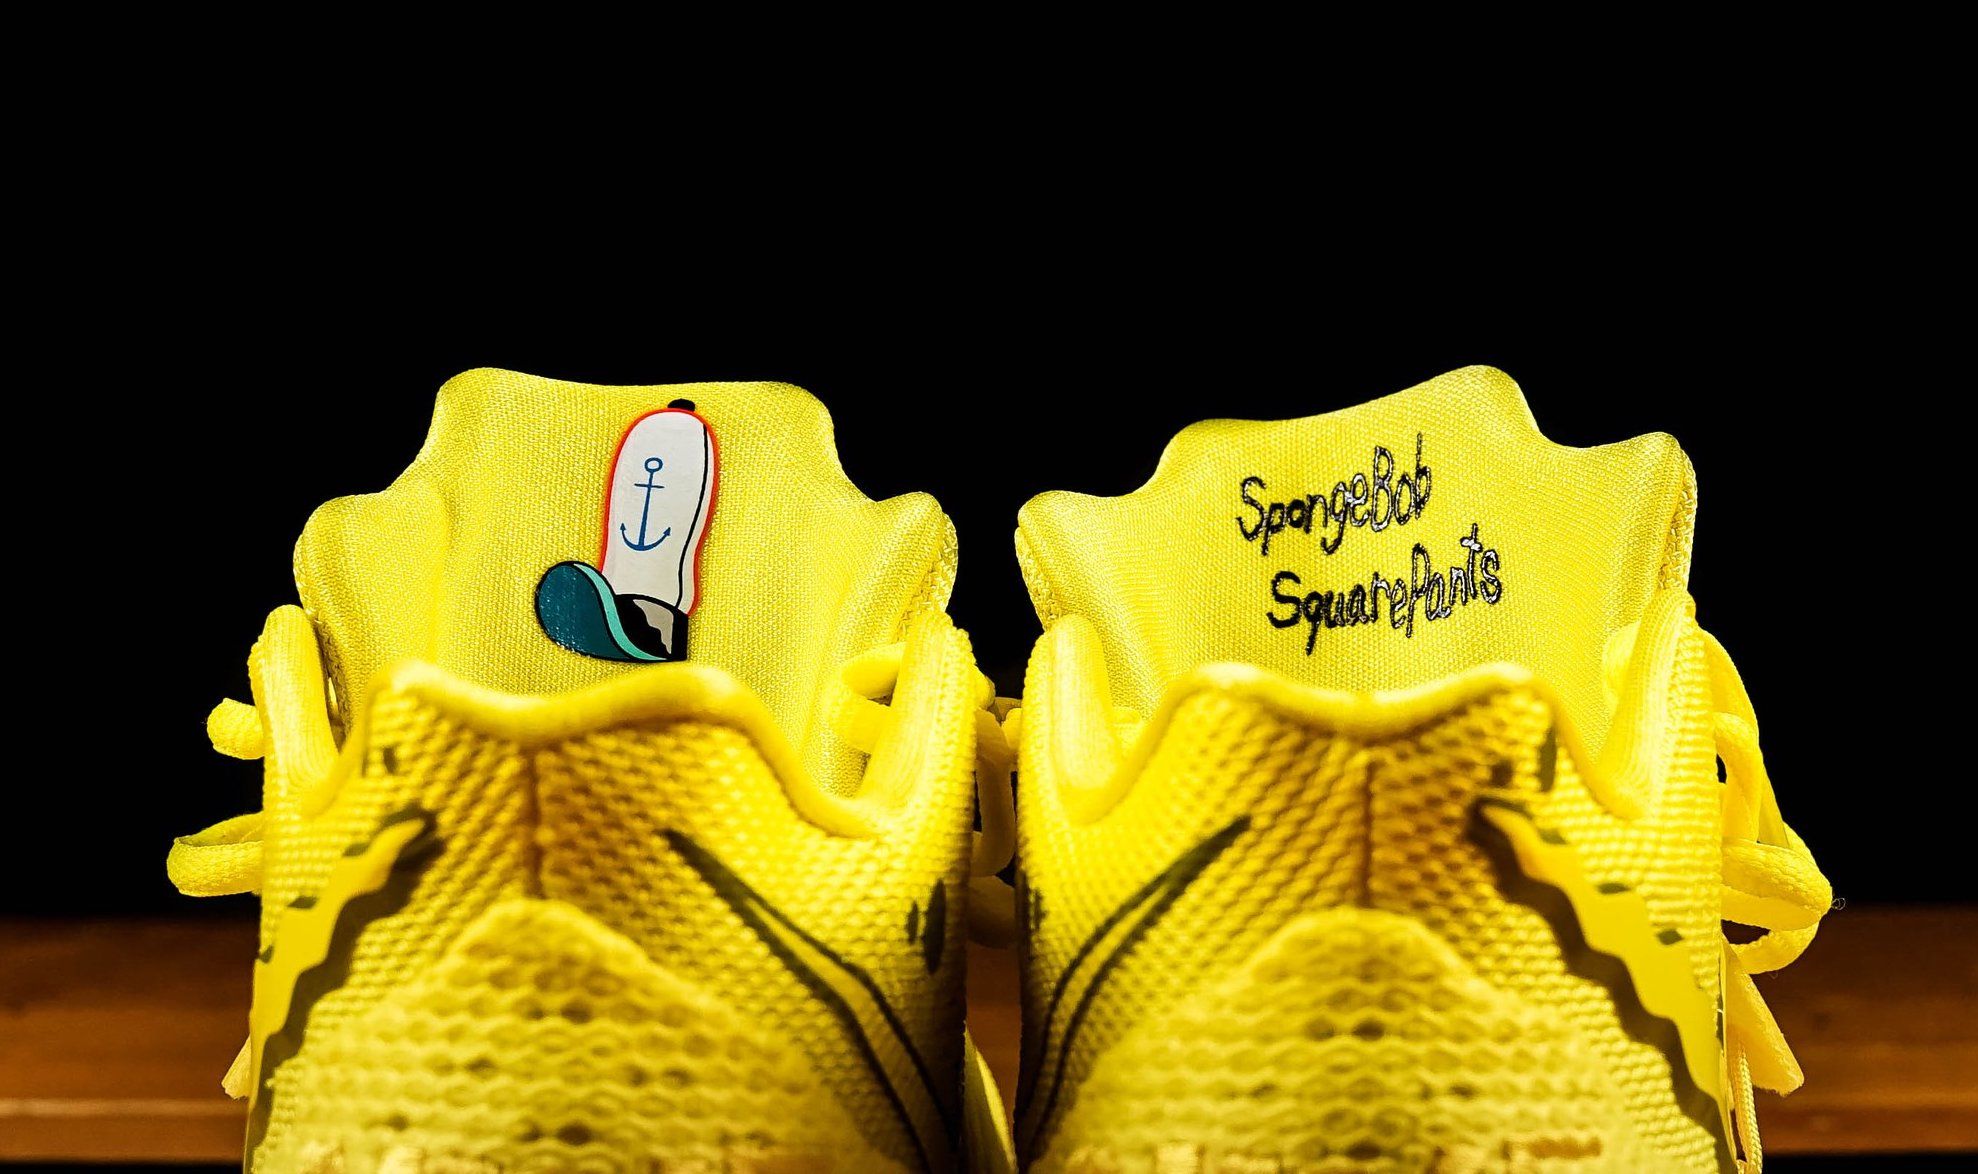 How To Buy The Nike Kyrie 5 SpongeBob SquarePants • KicksOnFire.com